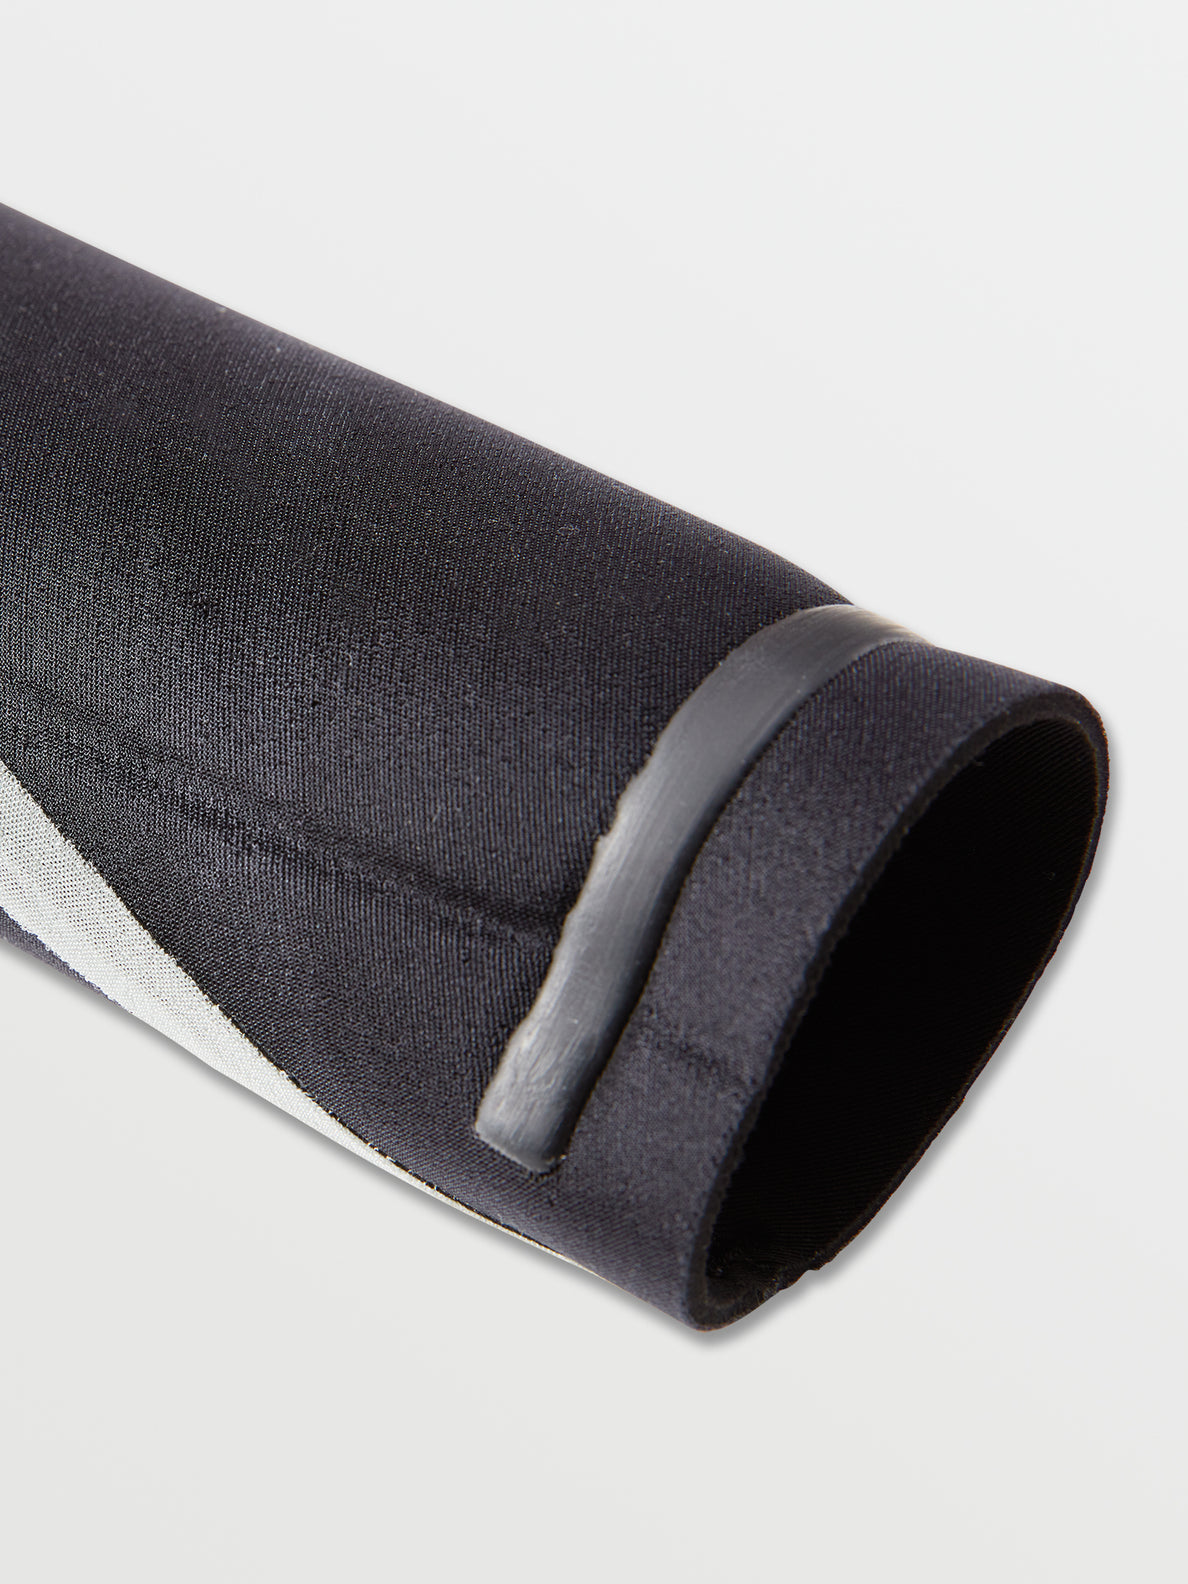 Modulator 2mm Long Sleeve Chest Zip Wetsuit - Black (2022)